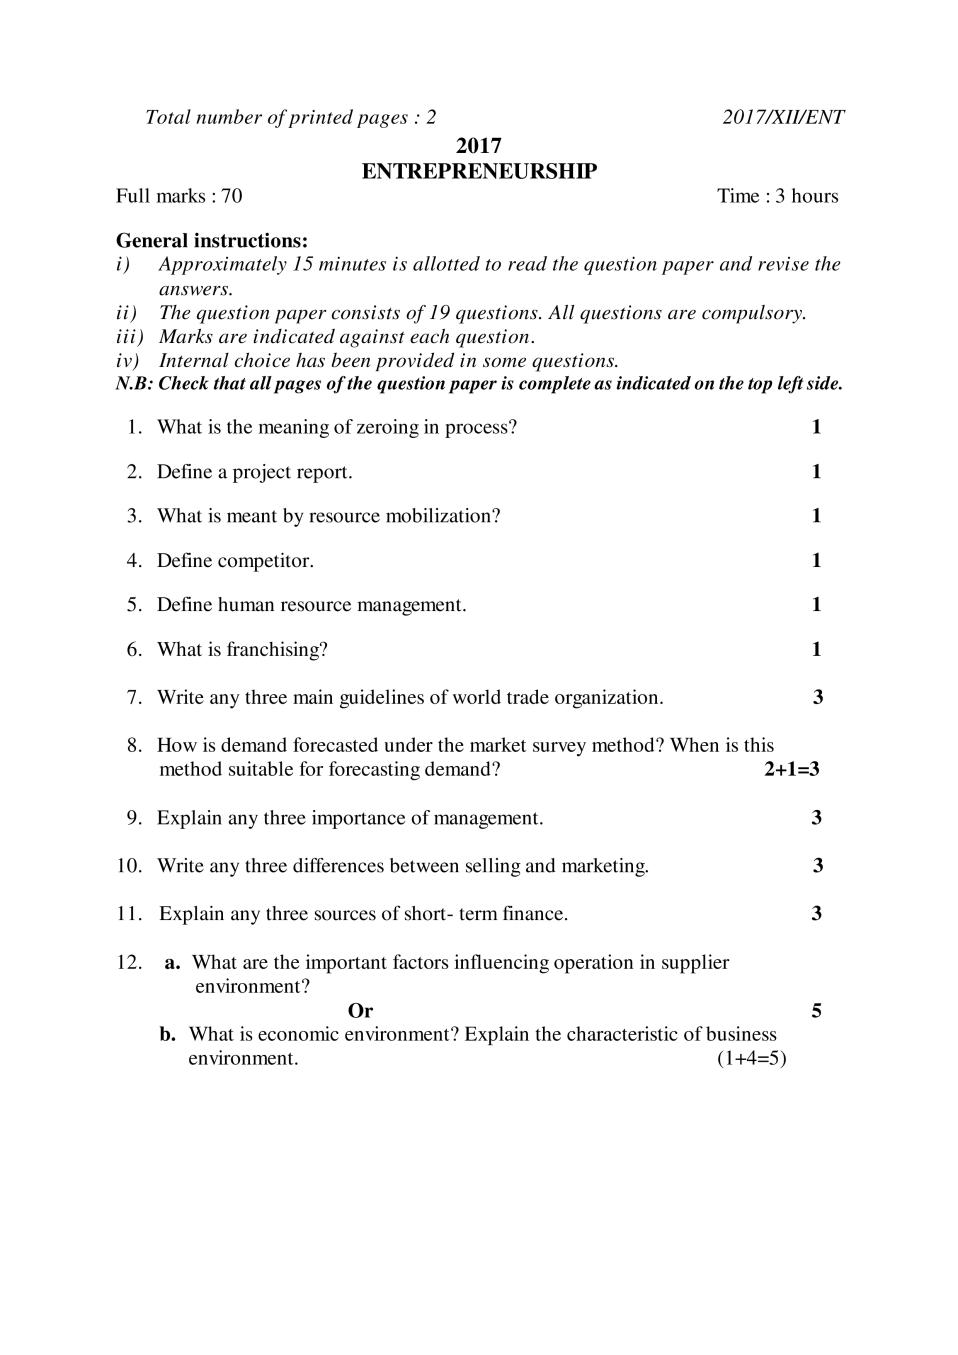 NBSE Class 12 Question Paper 2017 for Entrepreneurship - Page 1